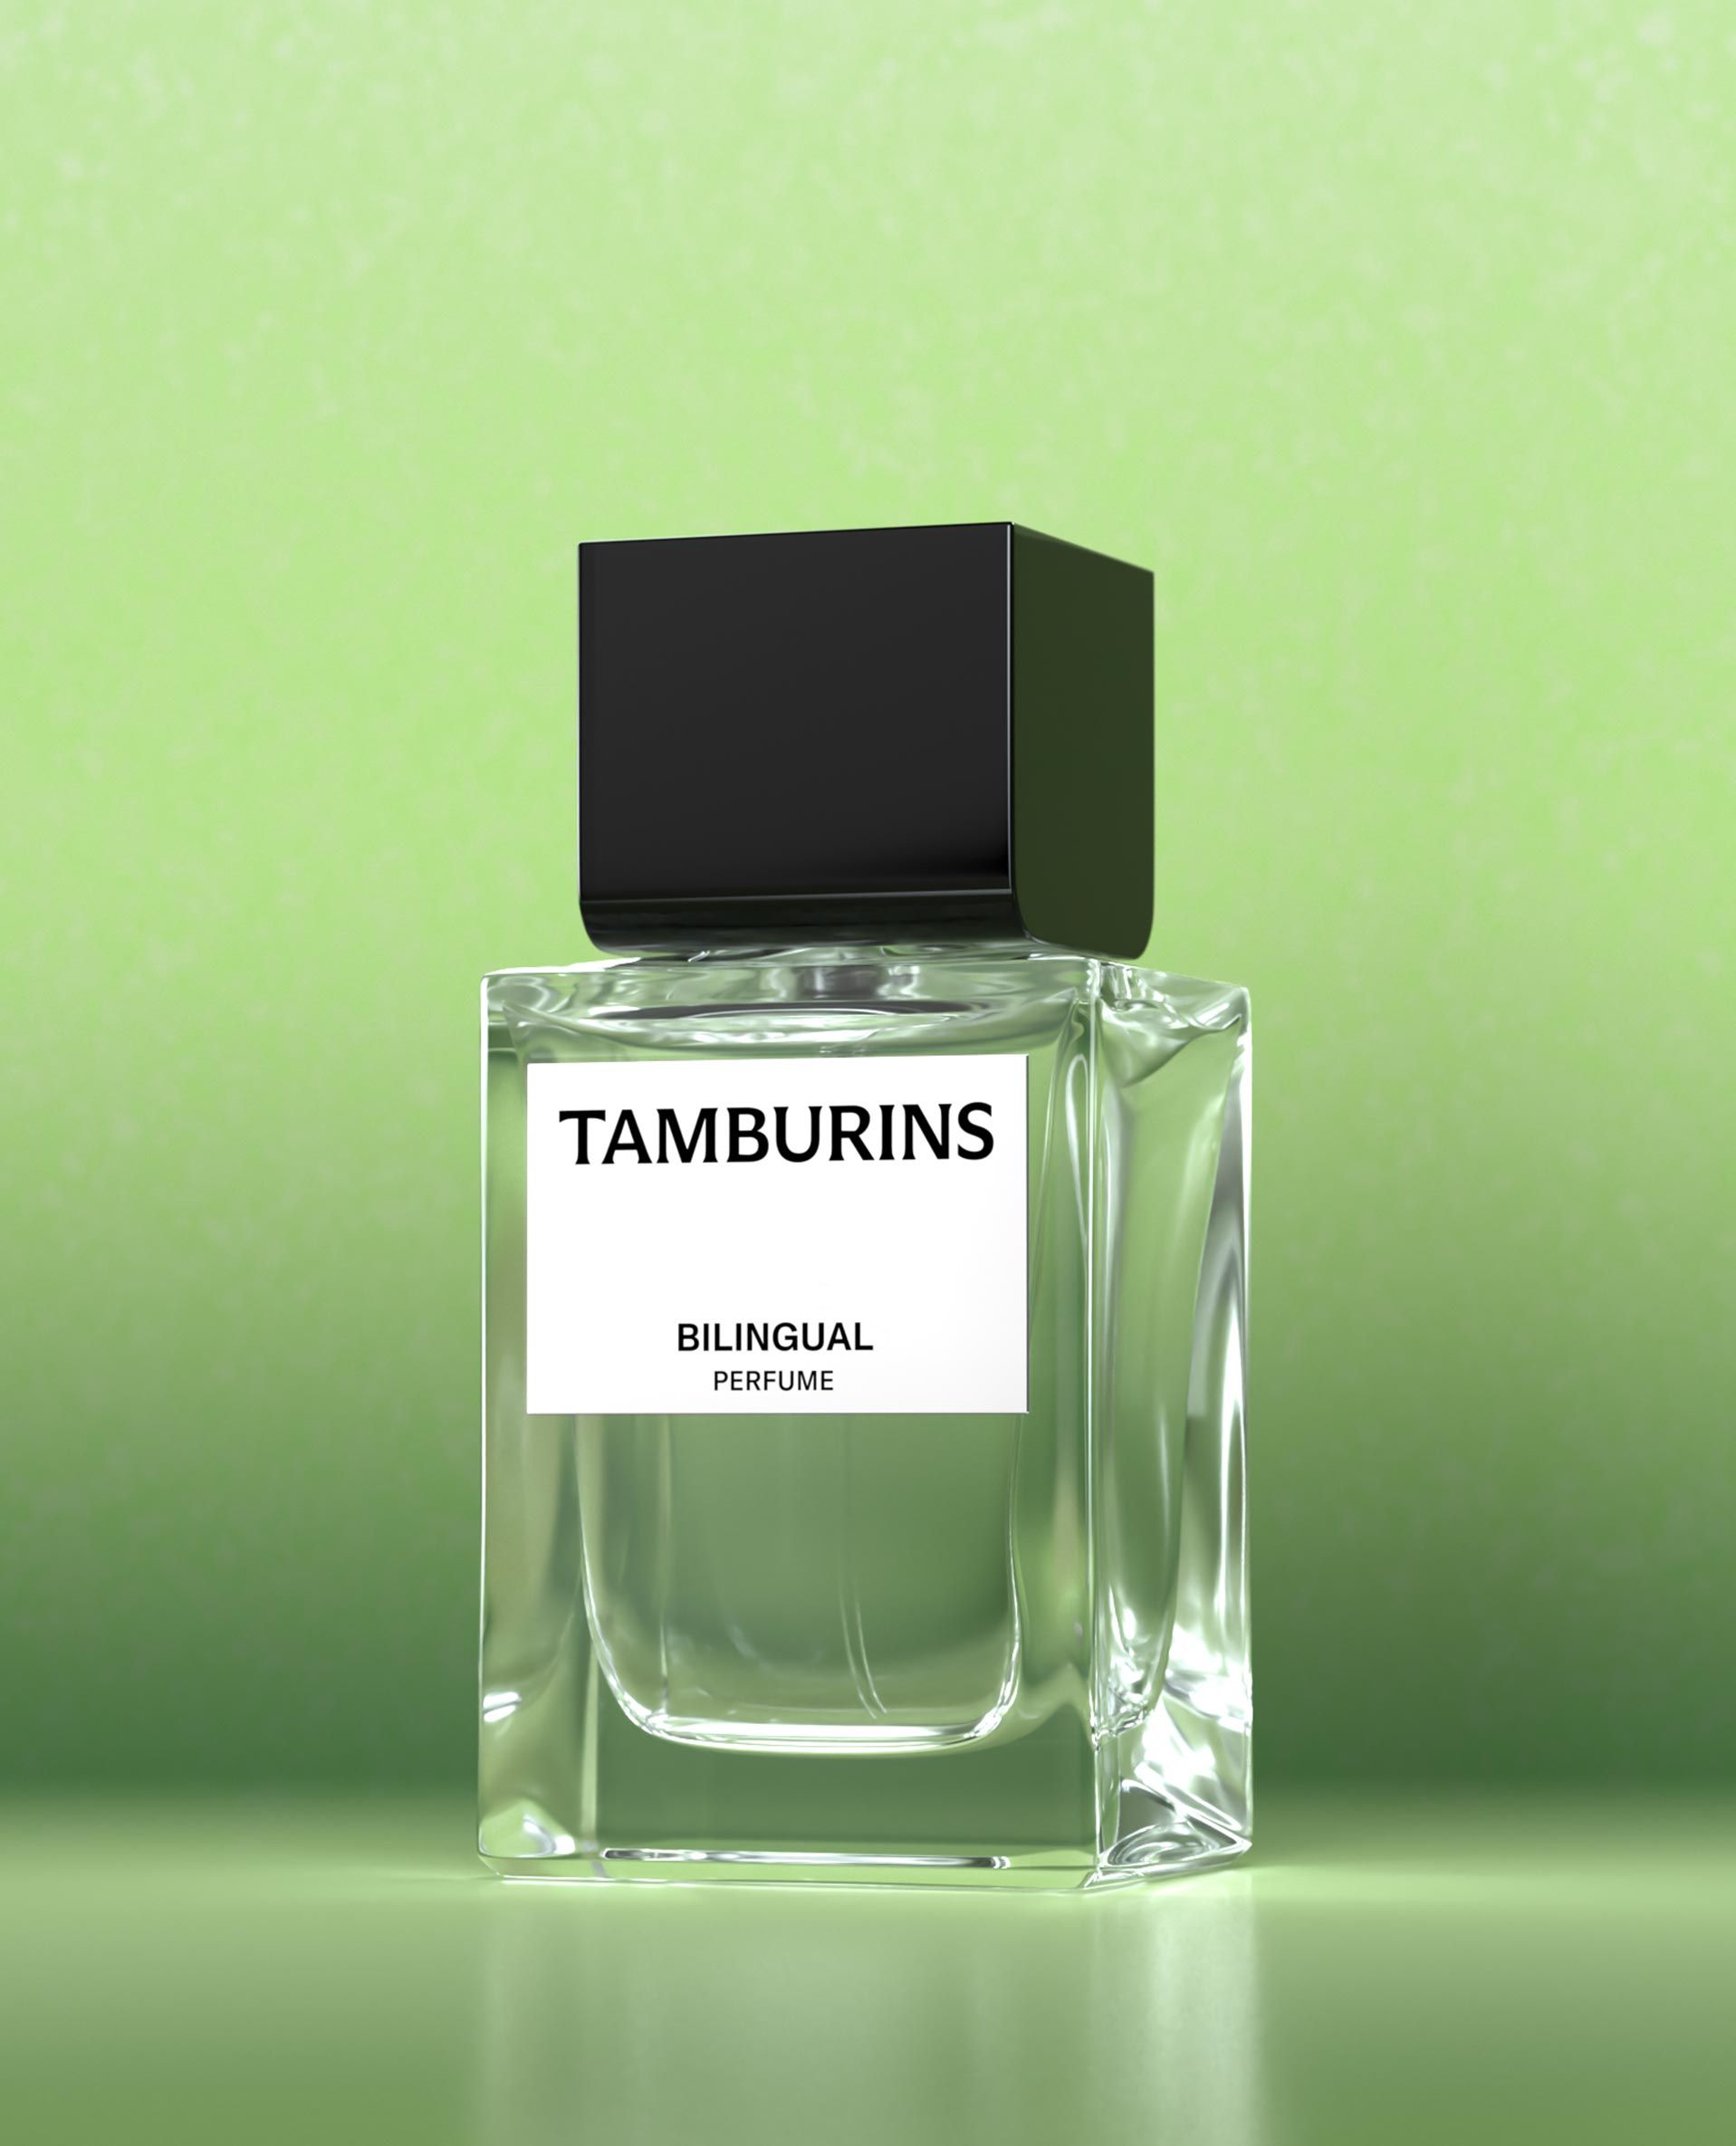  #Bilingual 50ml TAMBURINS Perfume in elegant bottle.